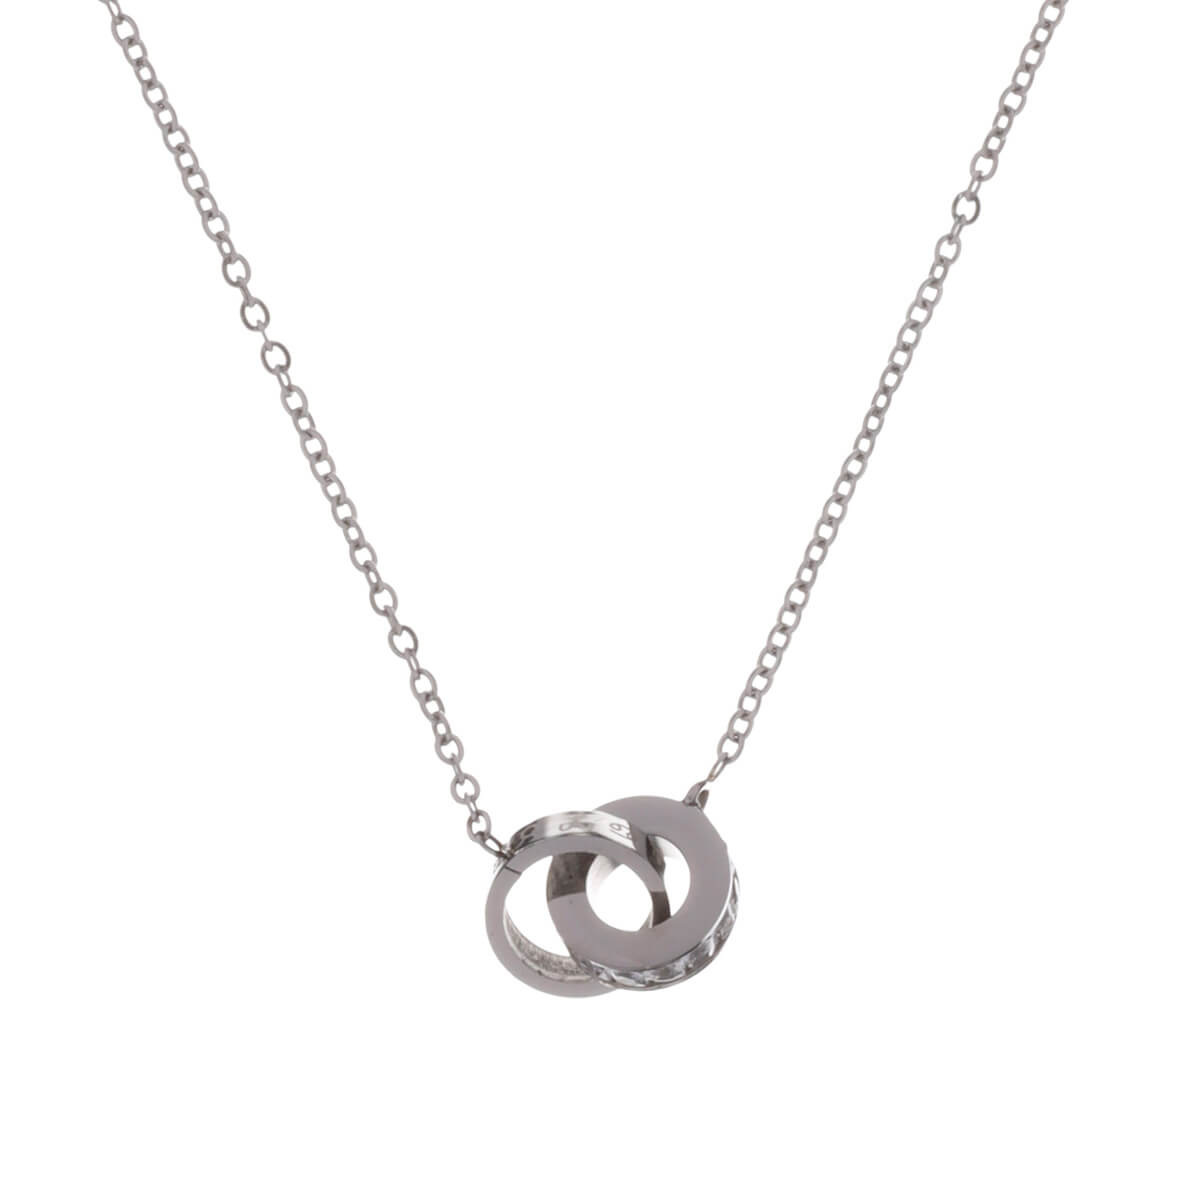 Sparkling circle pendant necklace (Steel 316L)